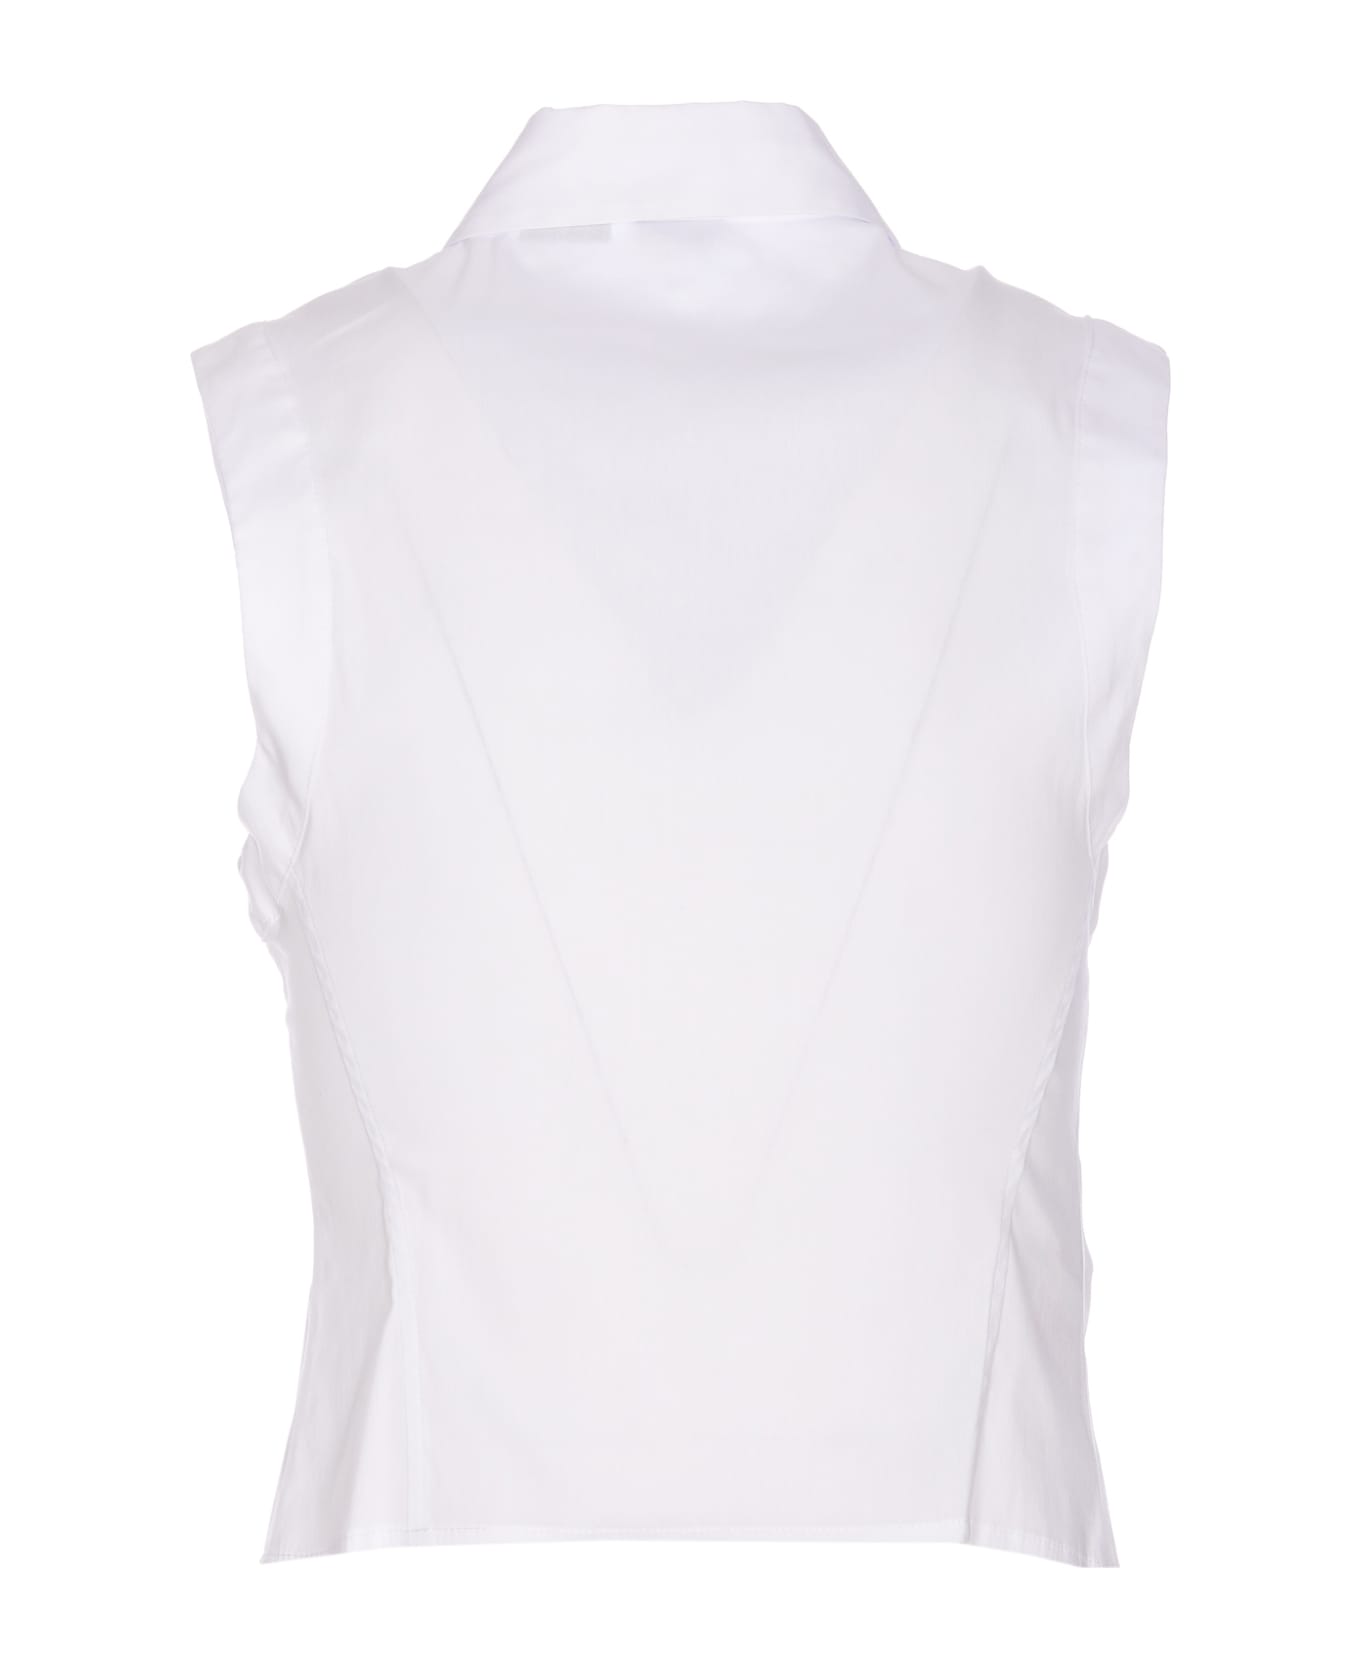 Pinko Clio Shirt - White シャツ